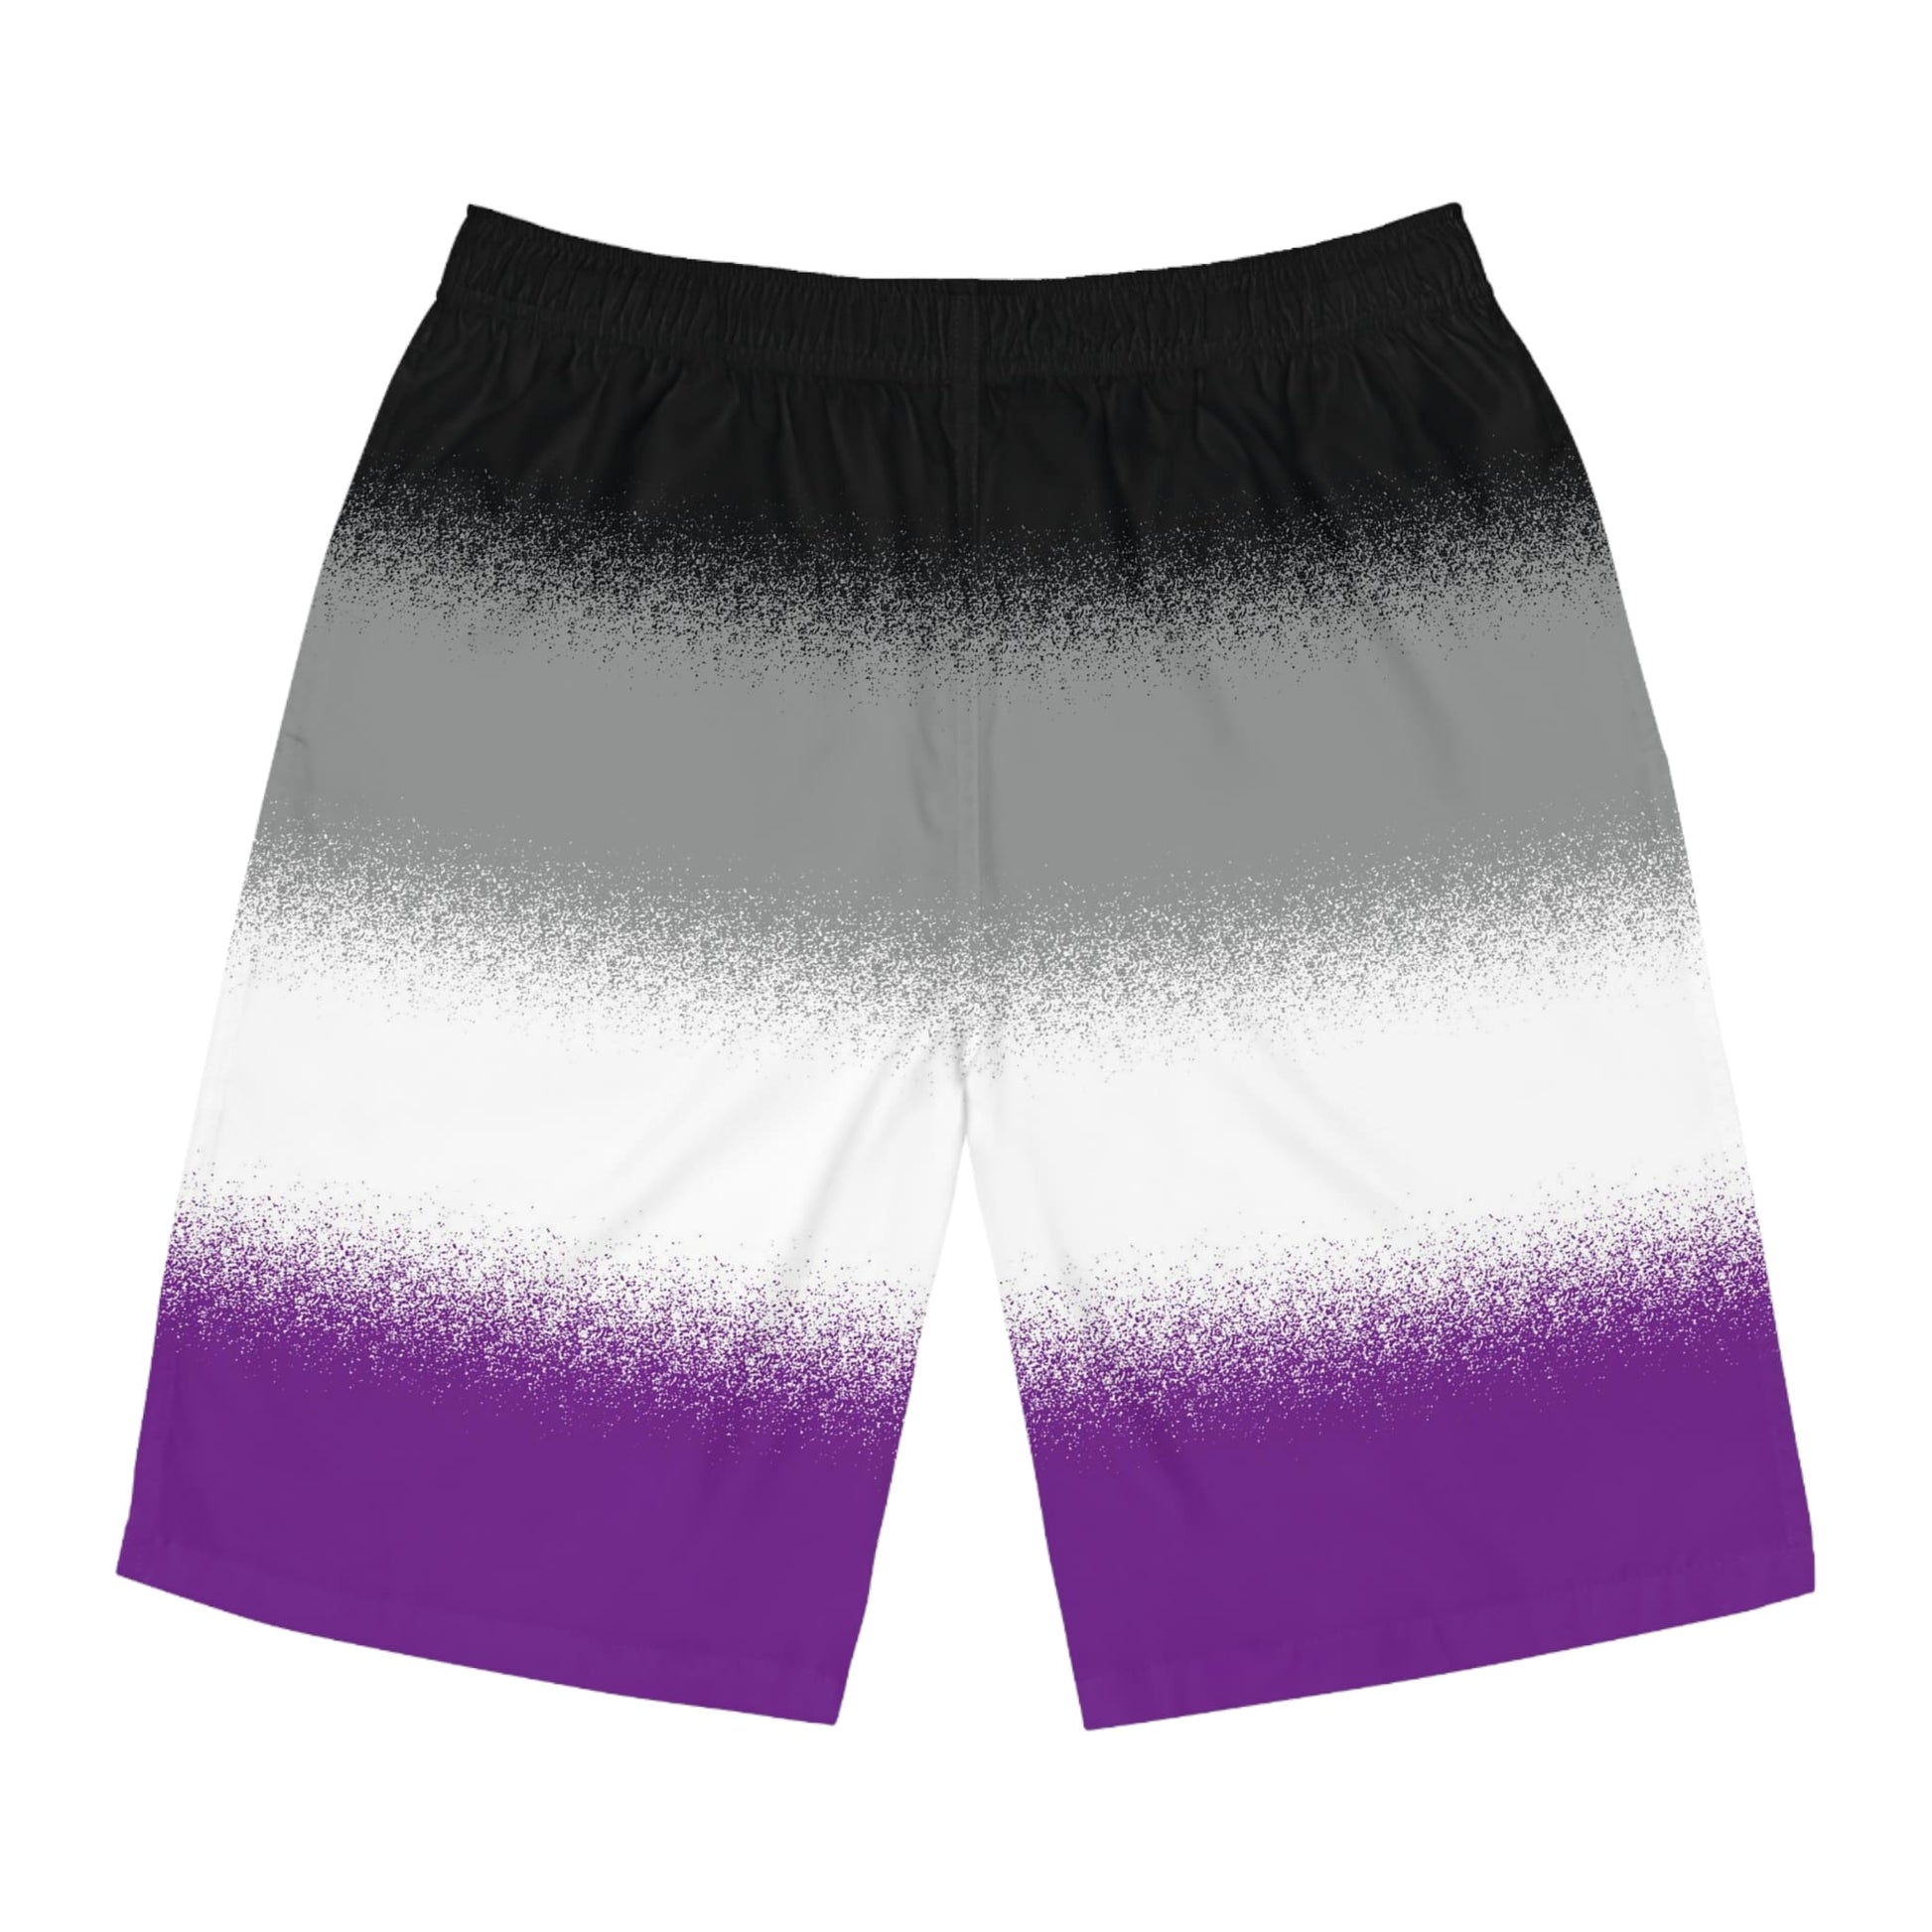 asexual swim shorts, flatlay